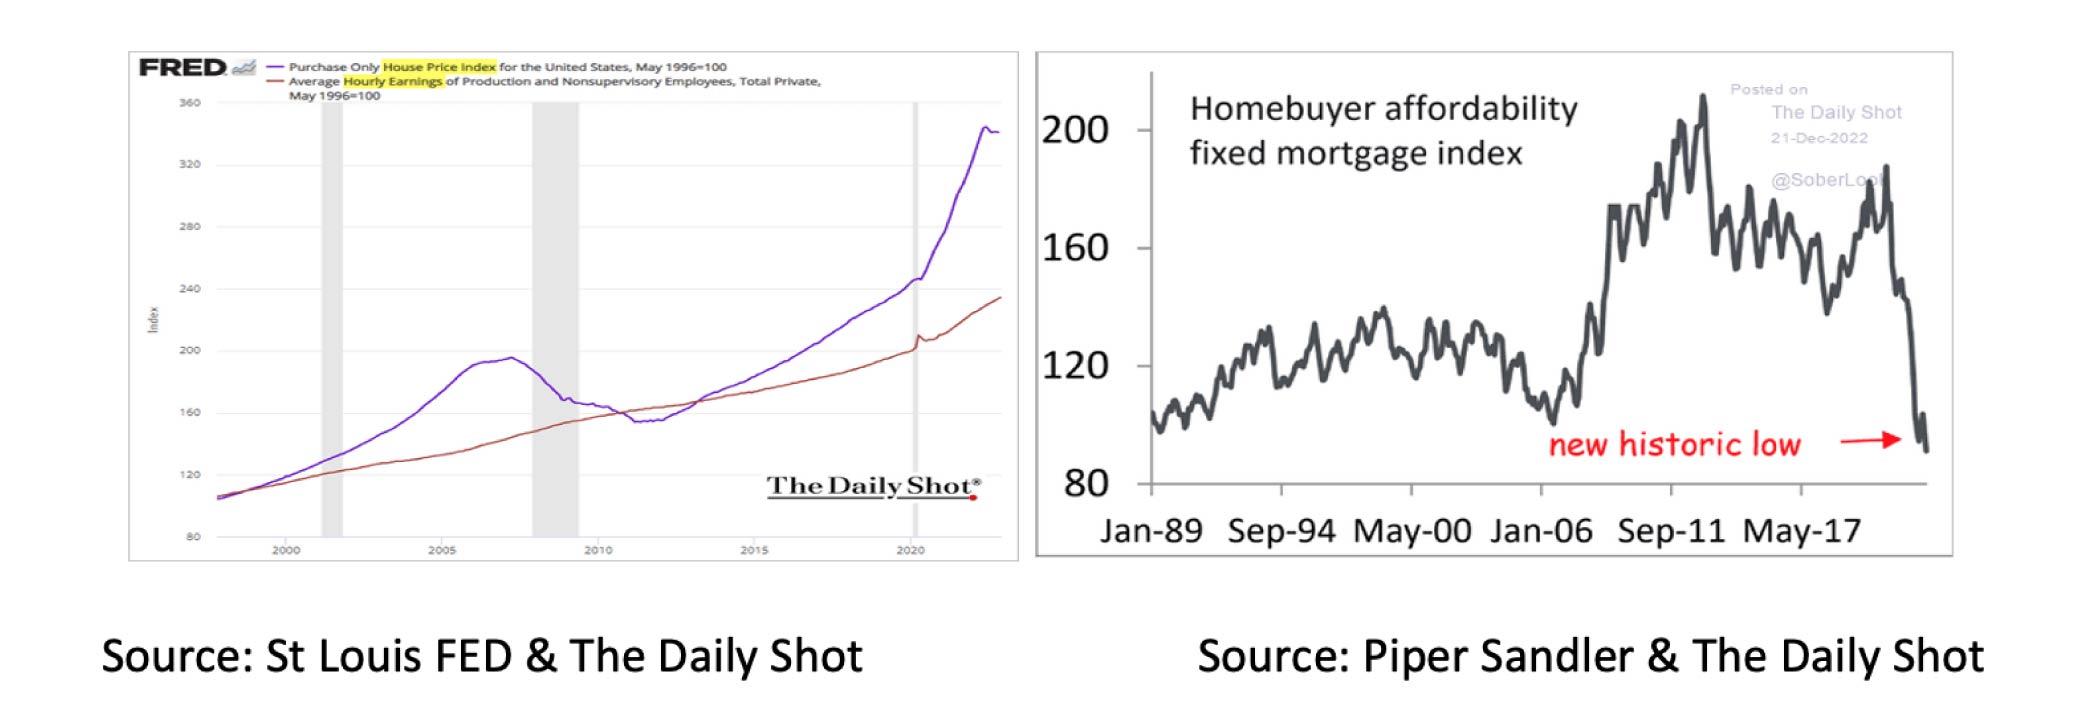 Homebuyer affordability fixed mortgage index - Feb 23